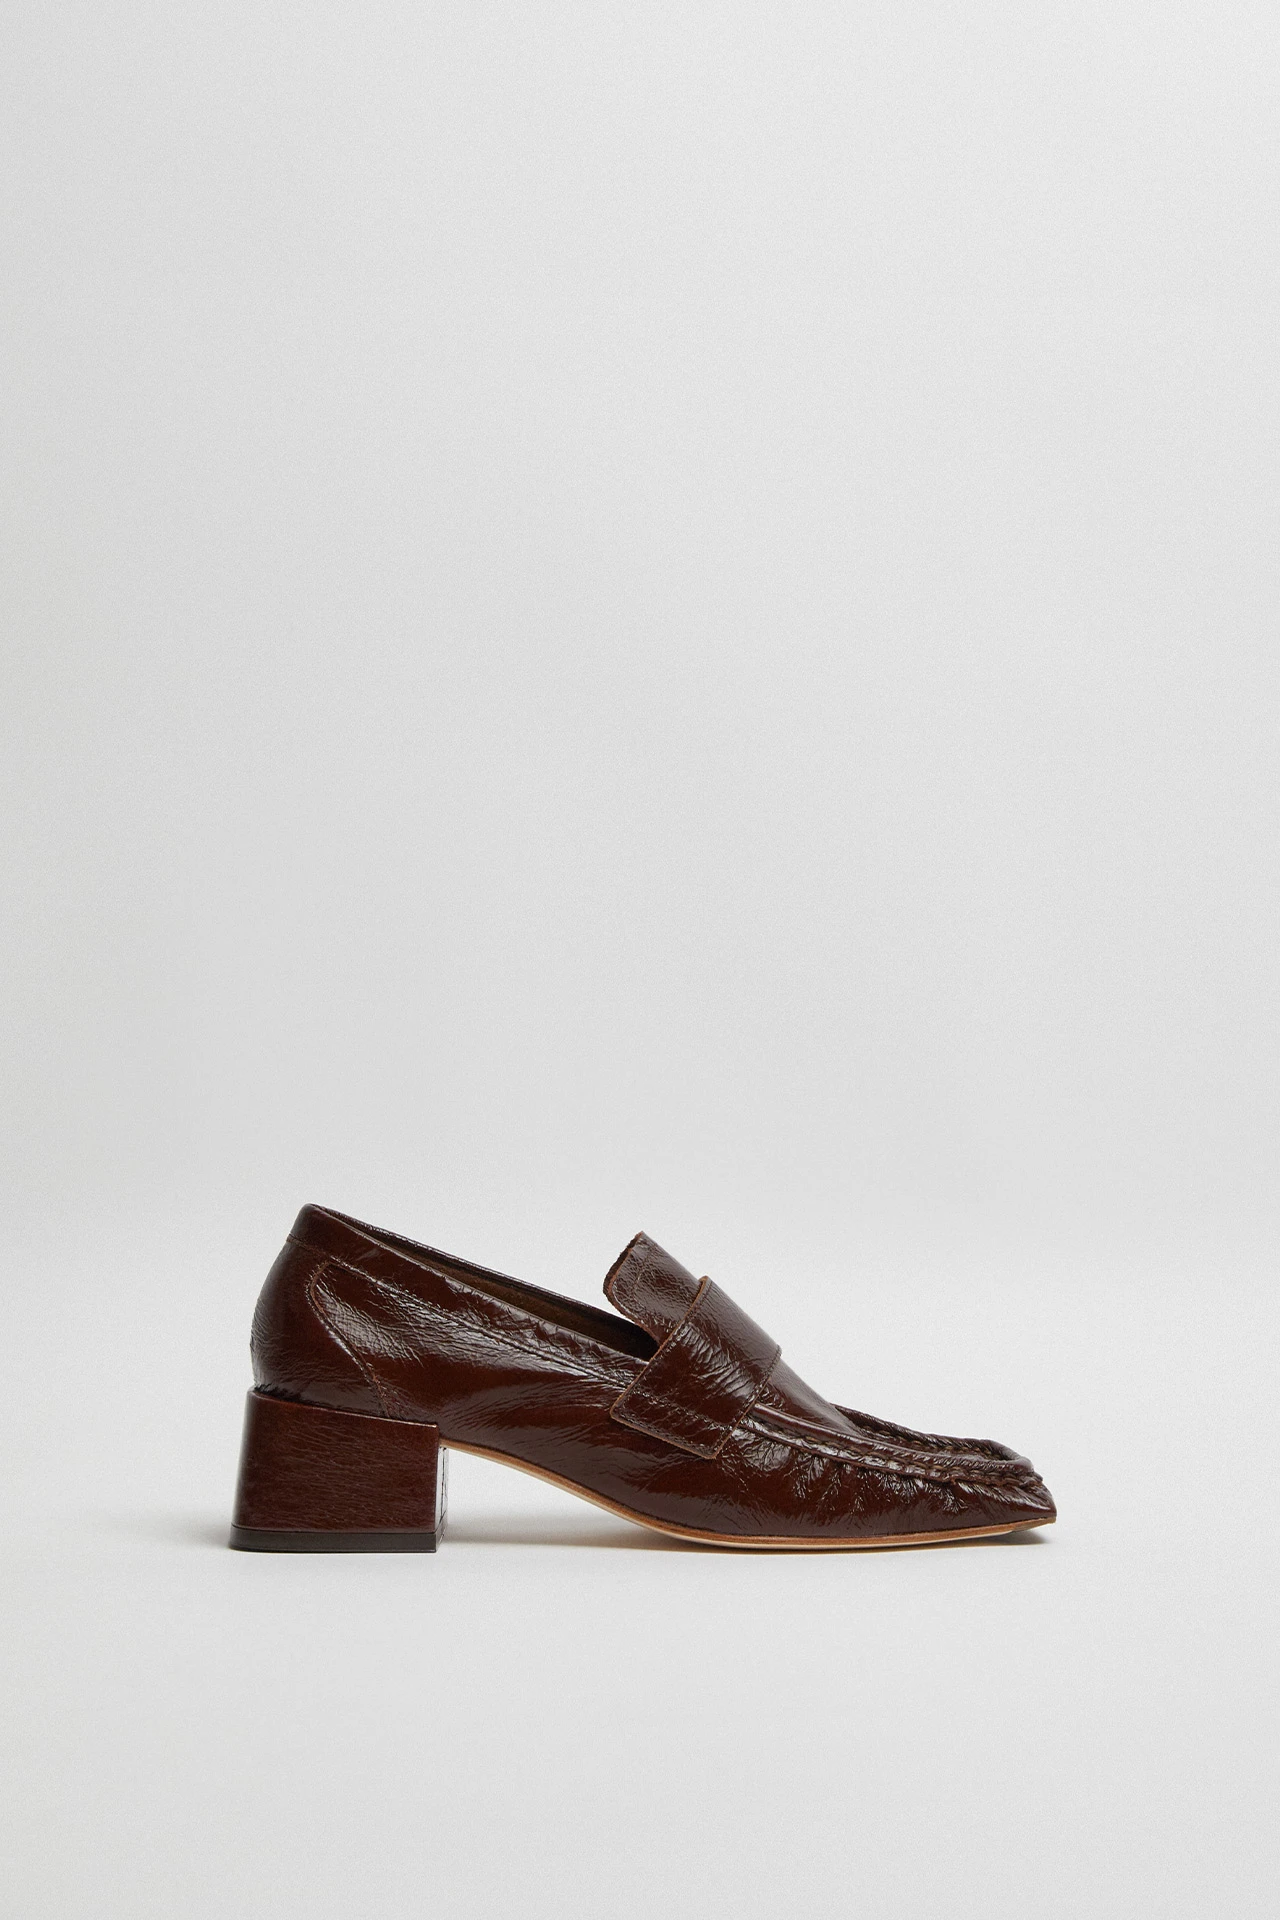 Miista-serena-brown-patent-loafers-01